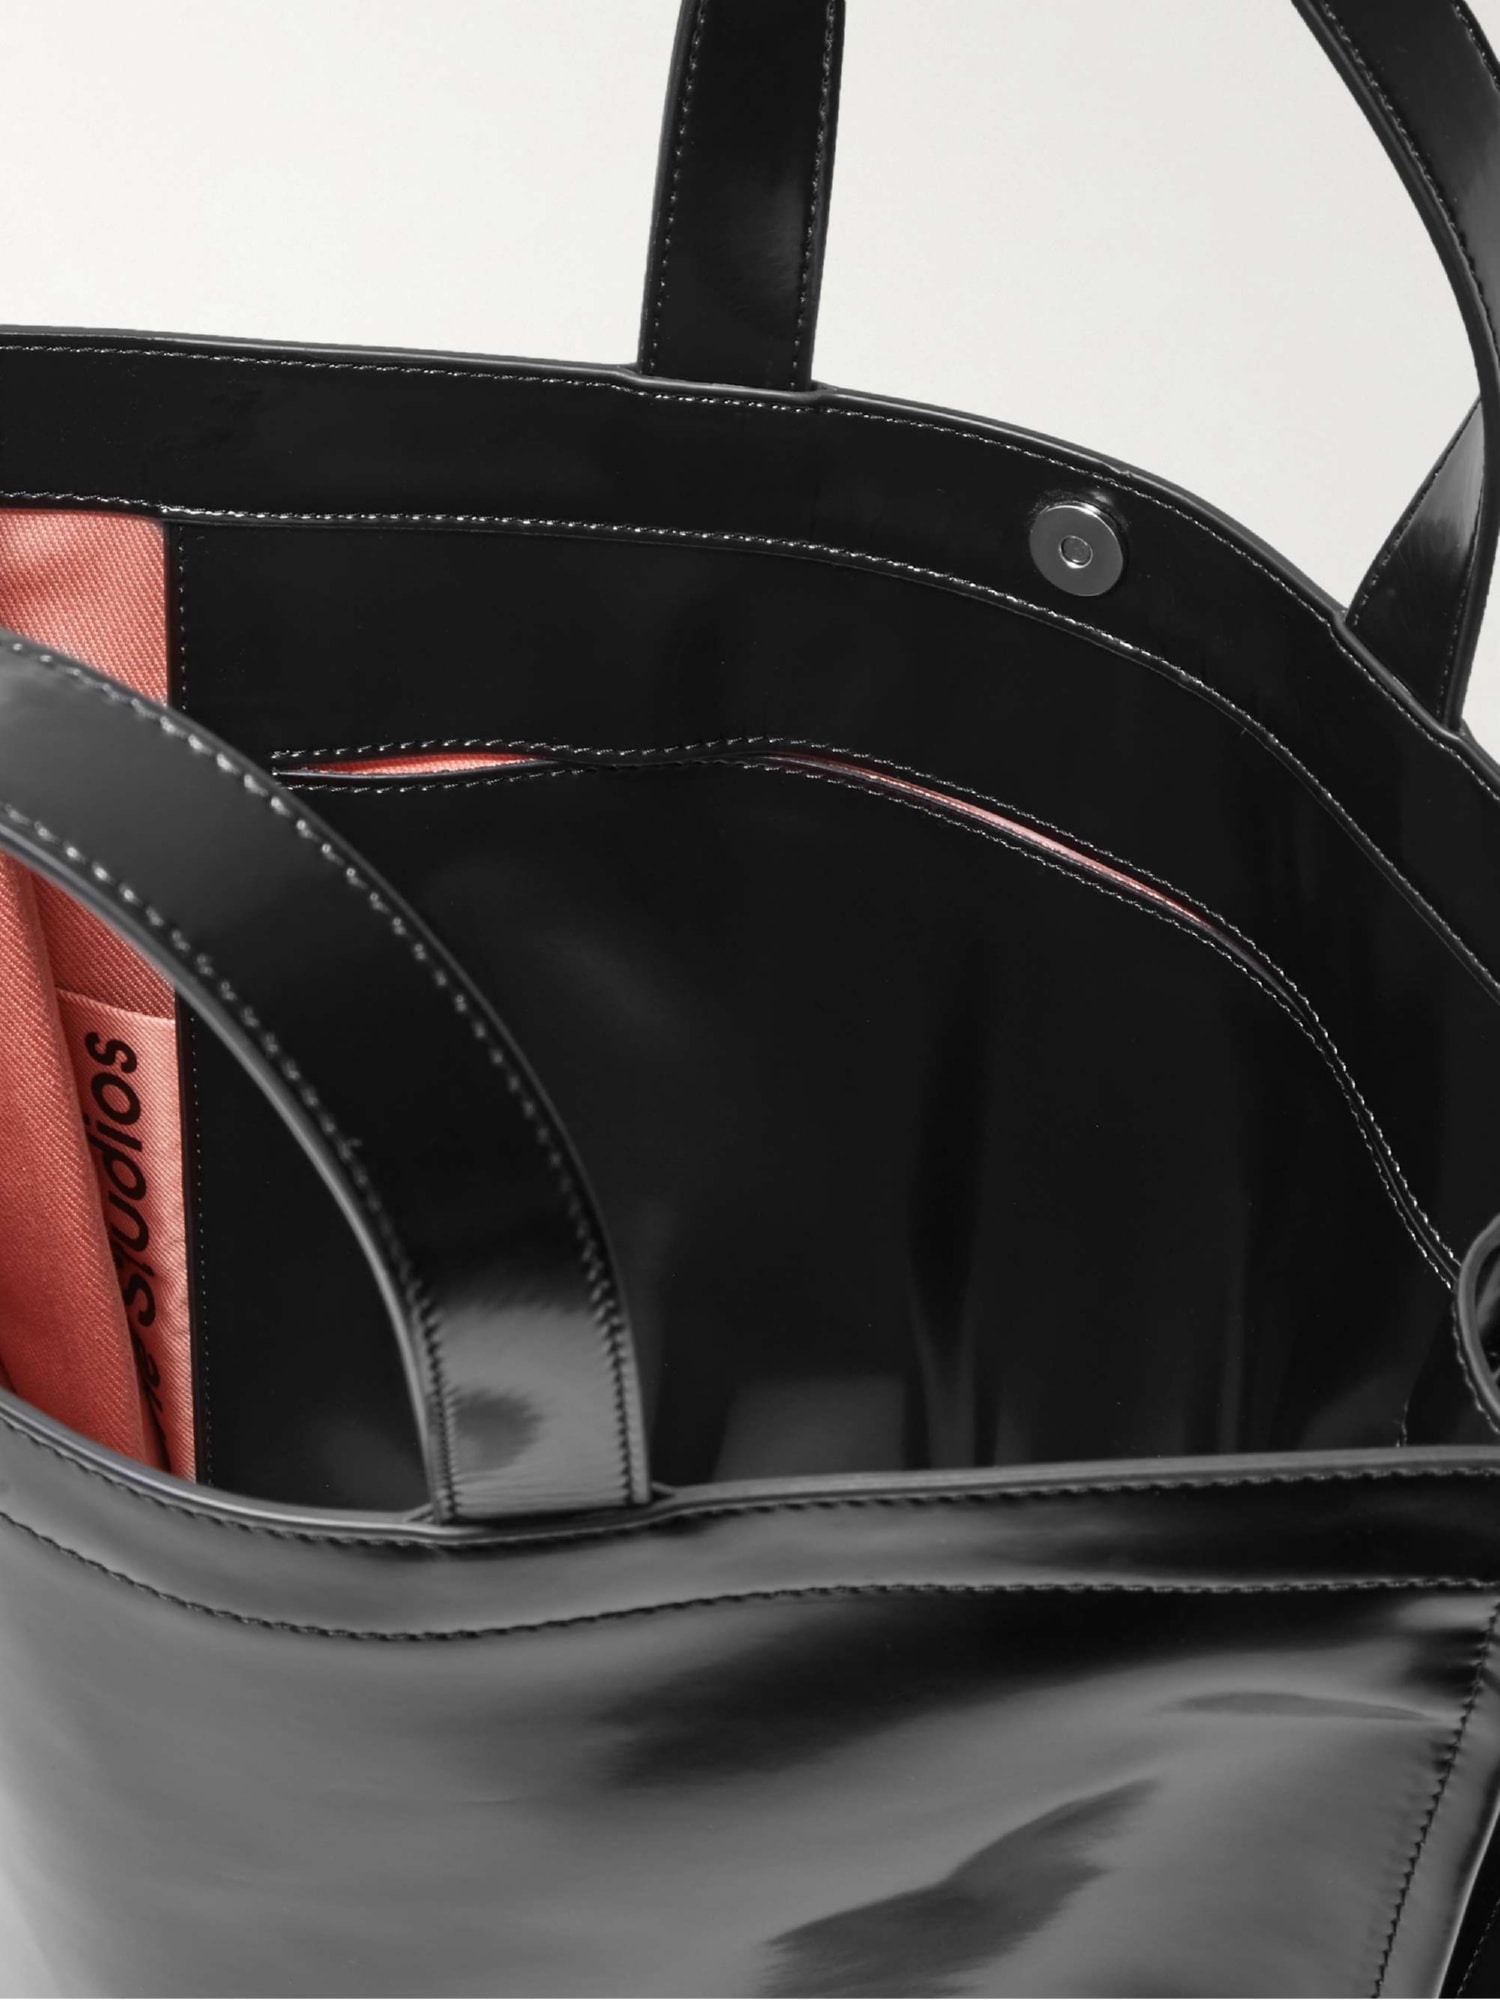 Calvin Klein Logo-Embossed Tote Bag